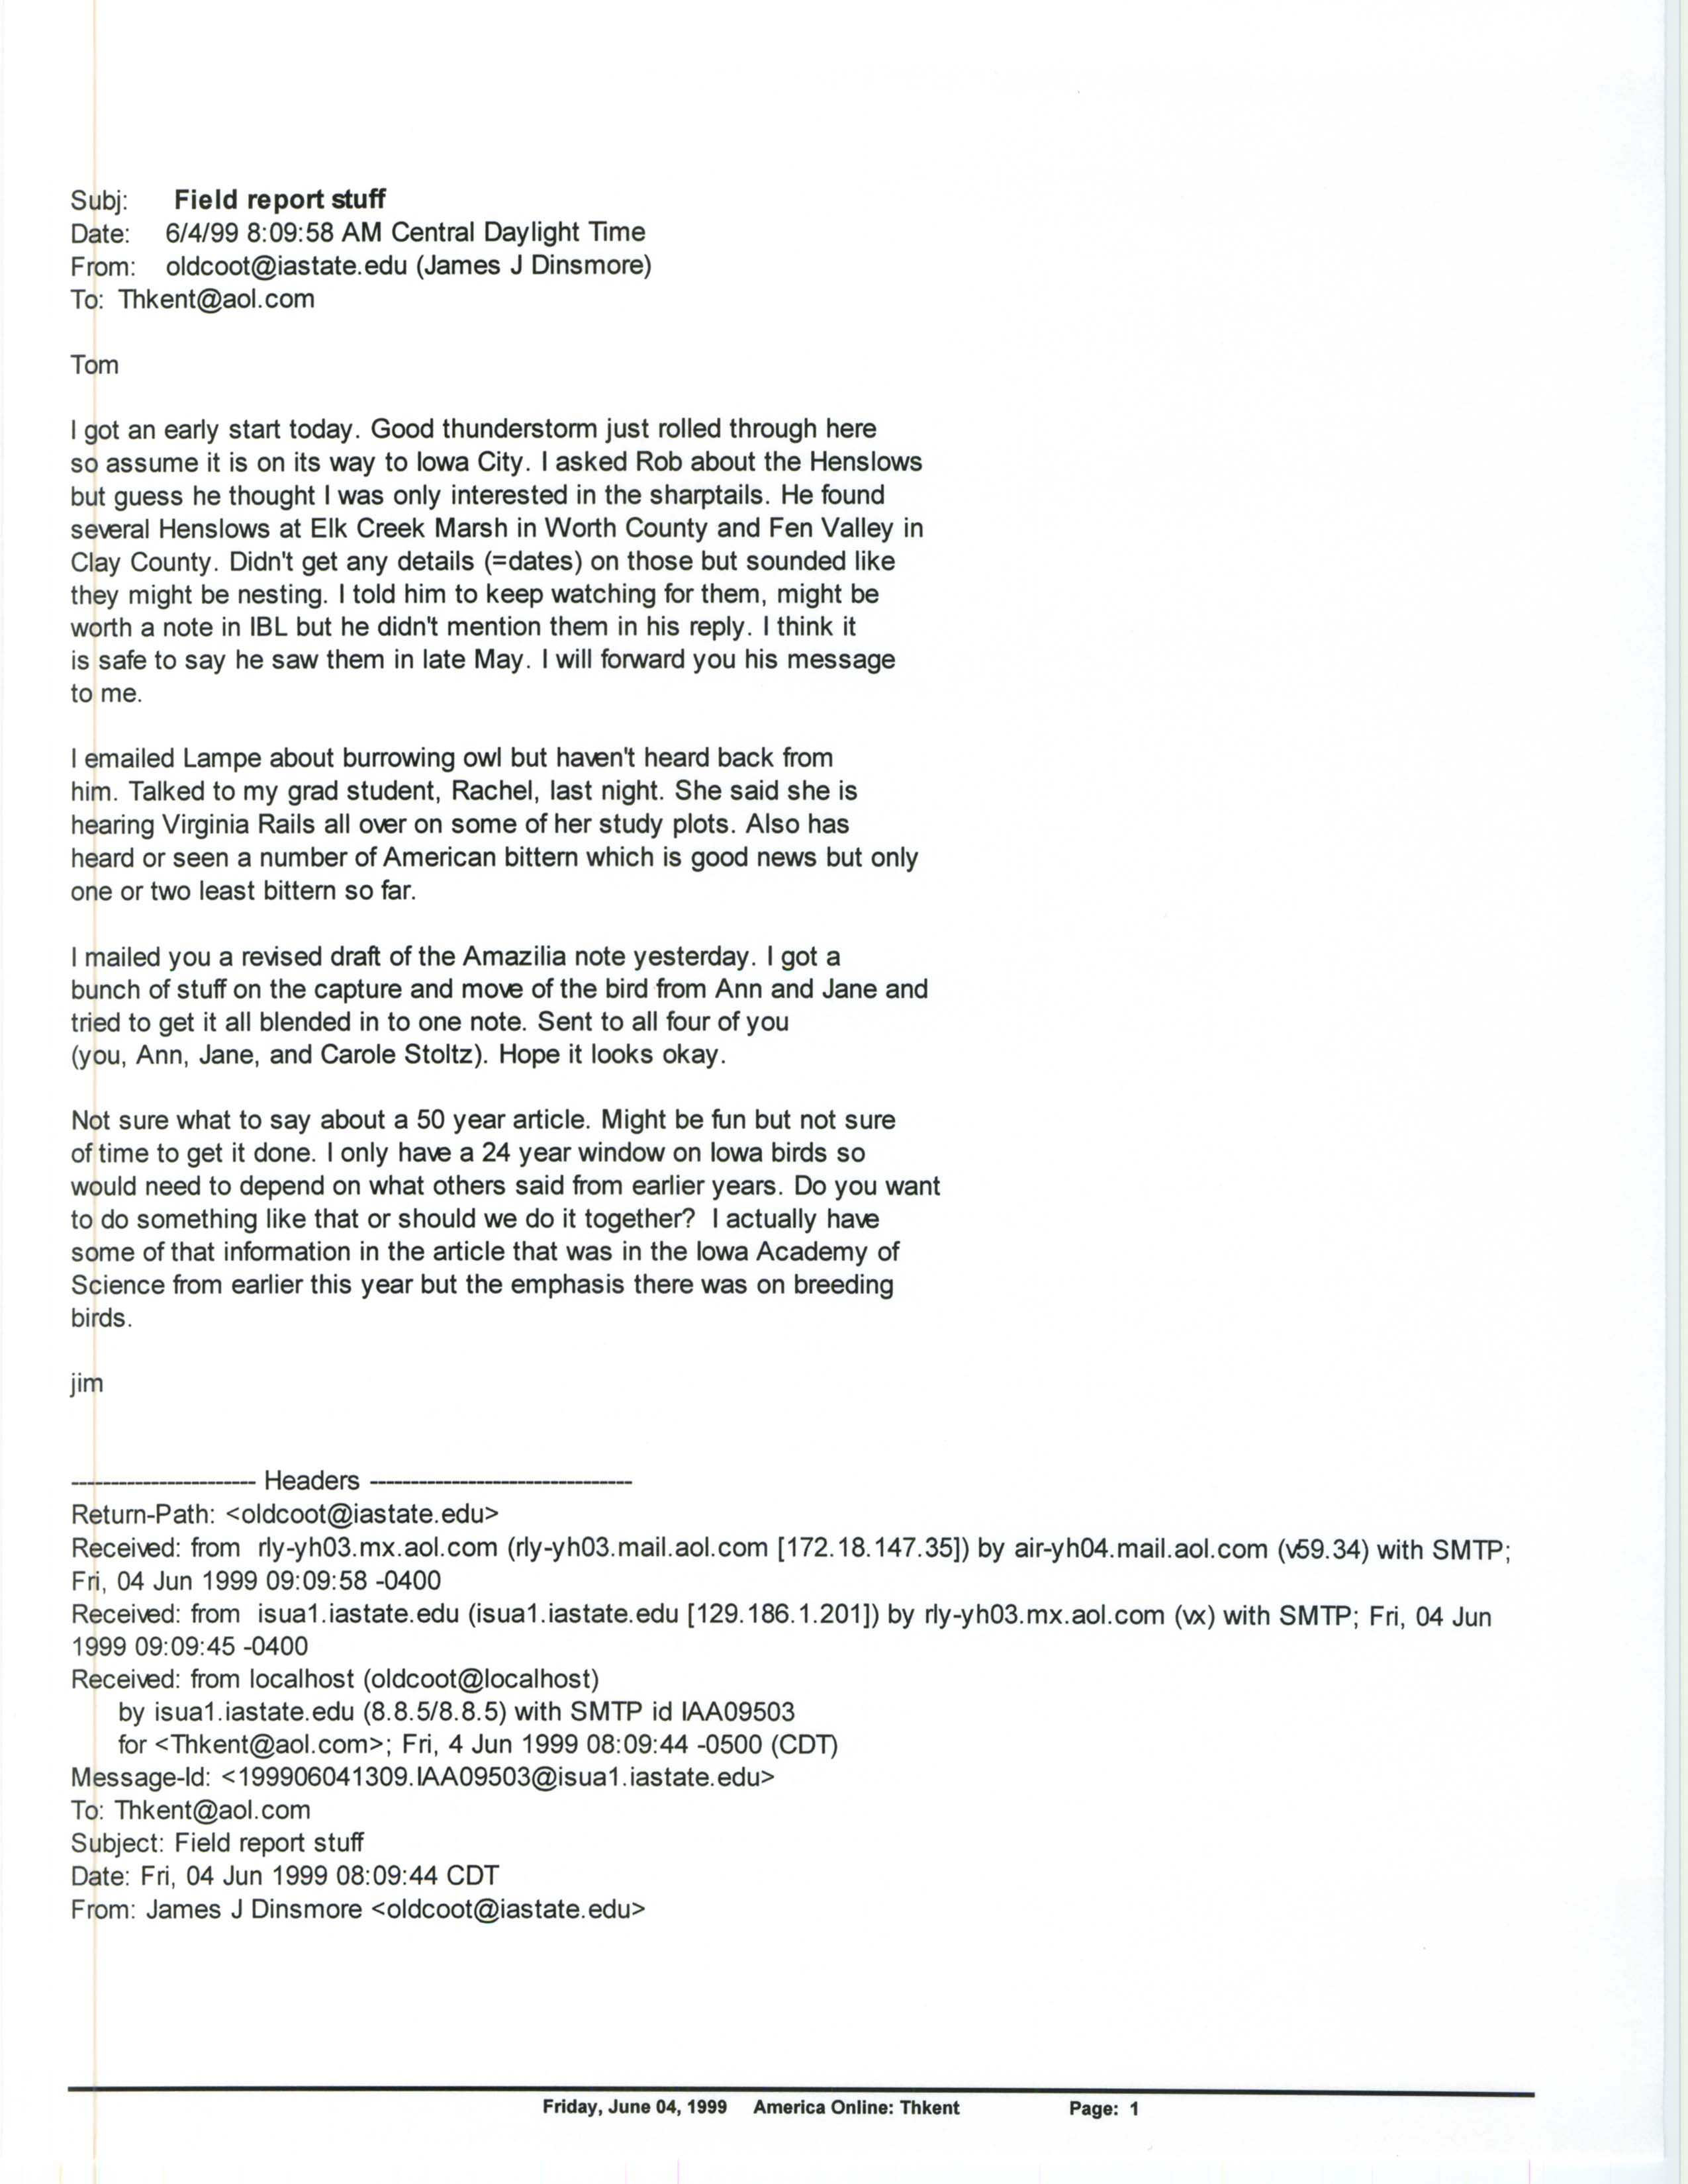 Jim Dinsmore email to Thomas Kent regarding field reports, June 4, 1999